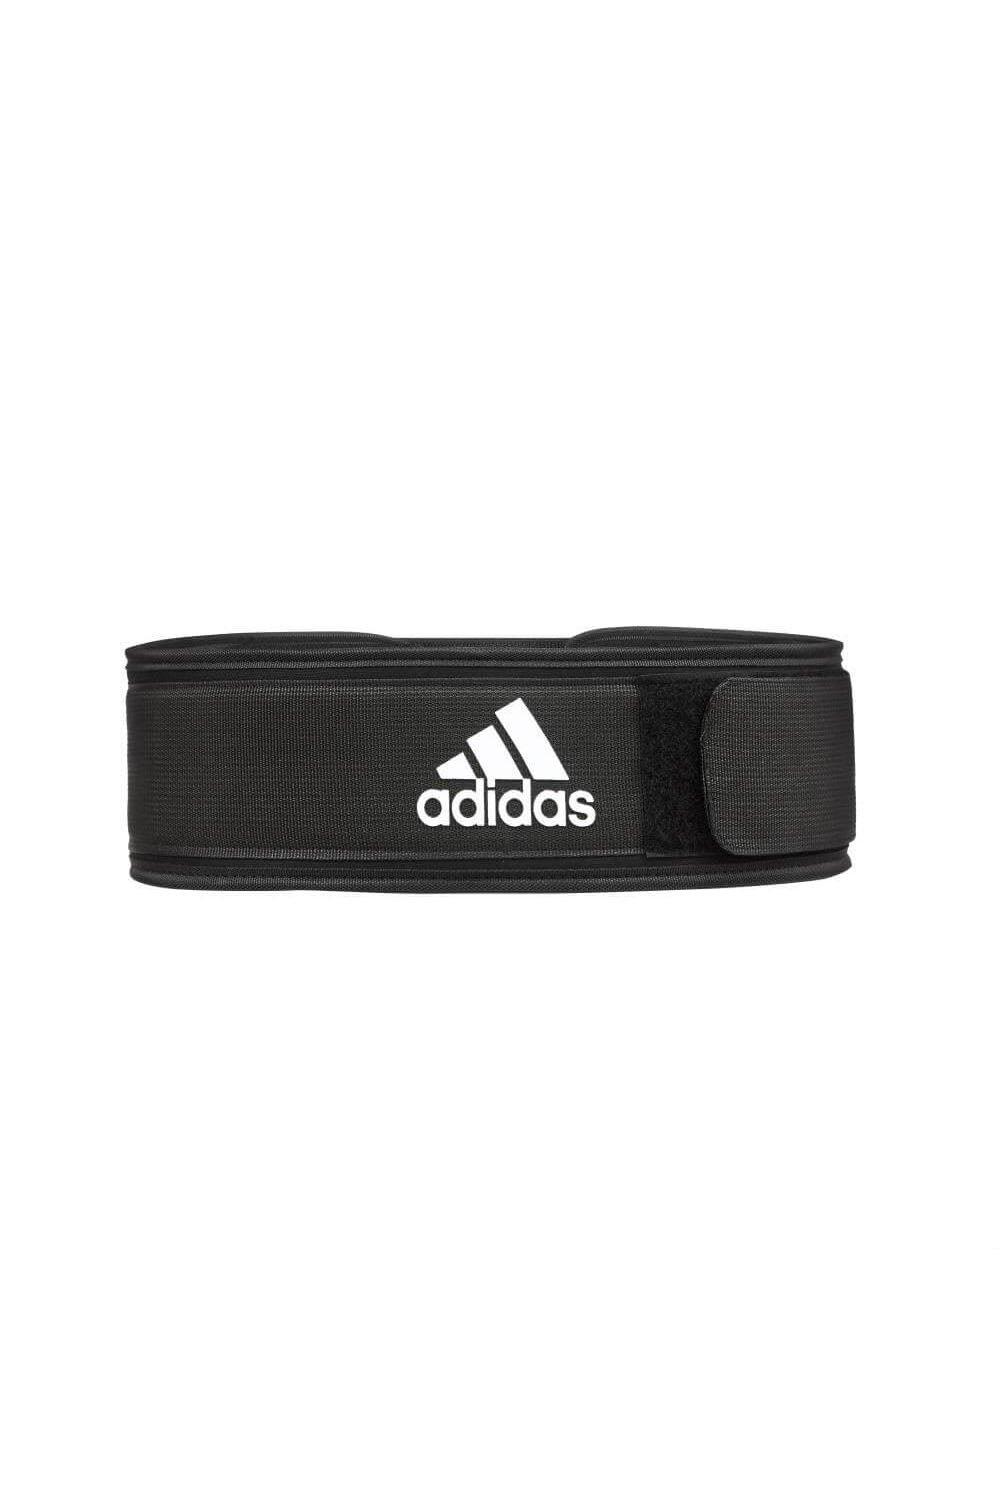 Adidas Essential Weight Lifting Belt|Size: M|black